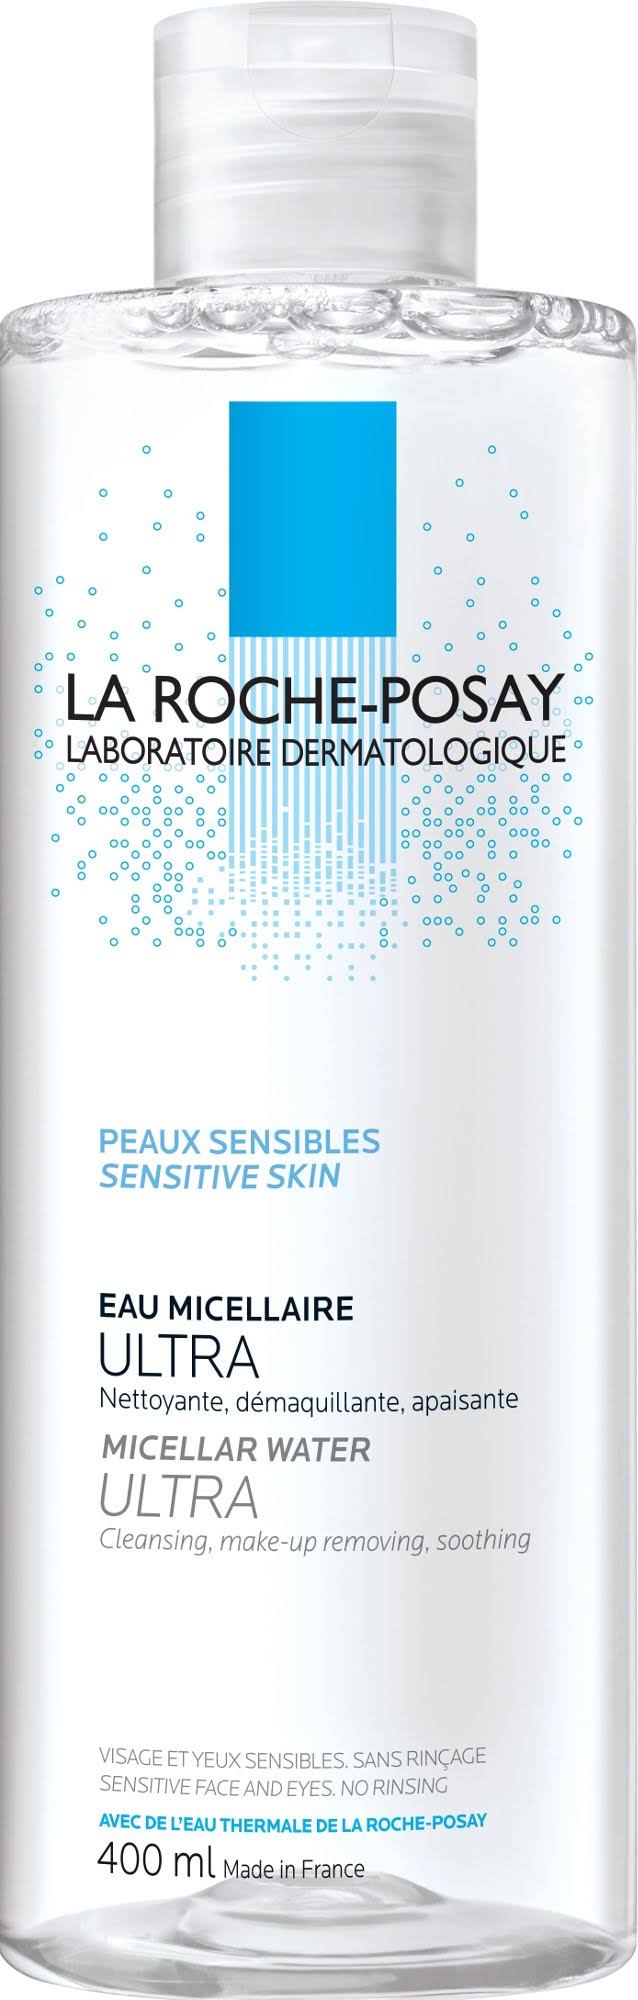 La Roche-Posay Micellar Water Cleansing Solution - 13.52 fl oz bottle